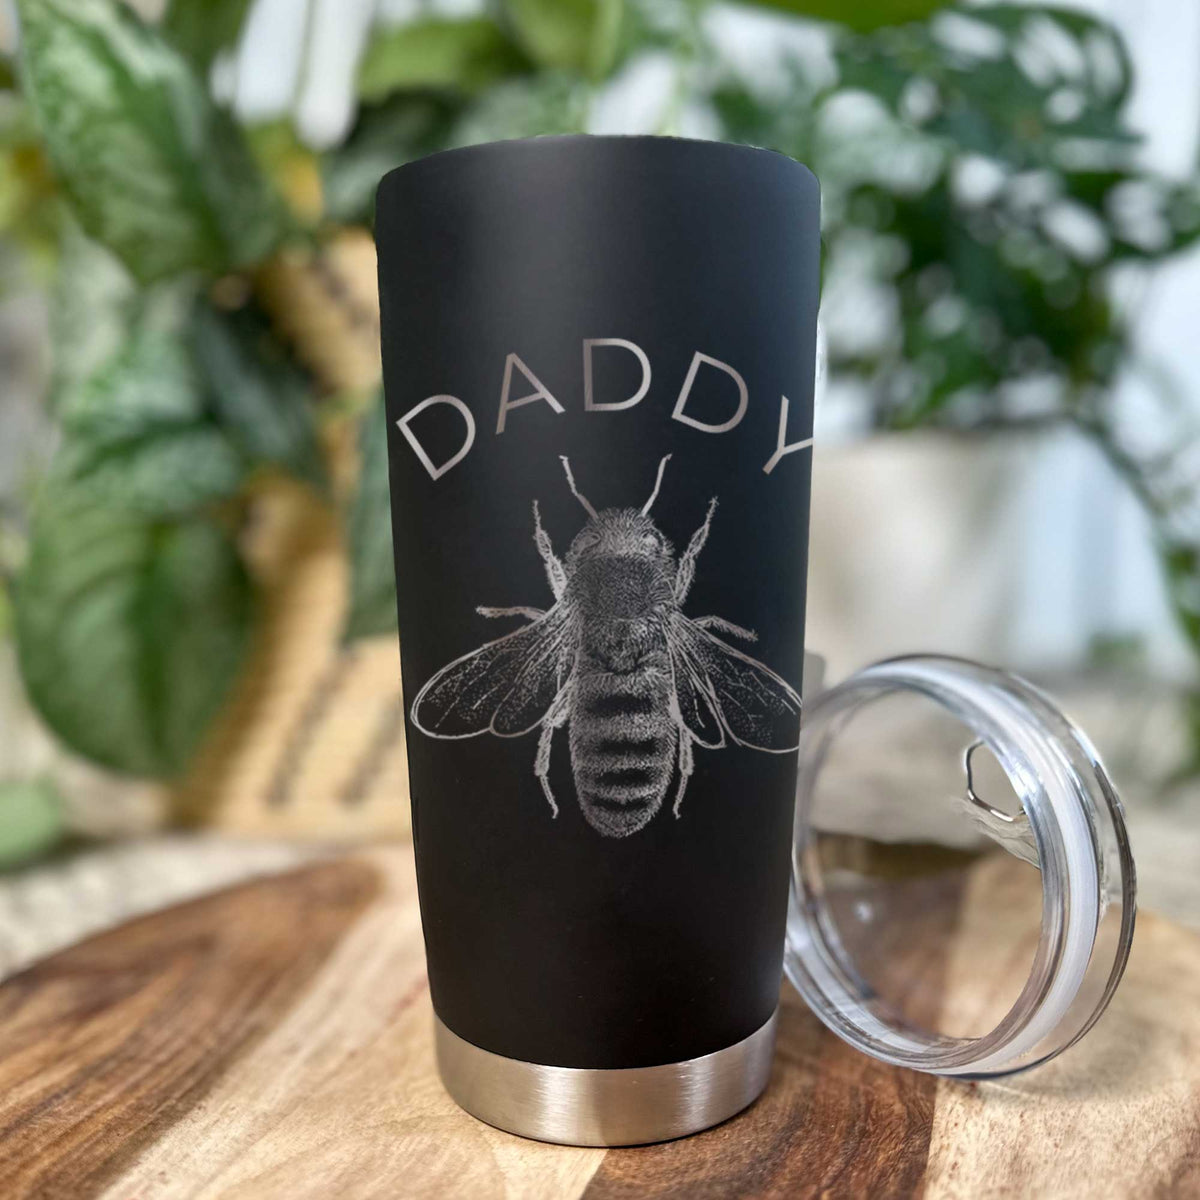 Daddy Bee - 20oz Polar Insulated Tumbler